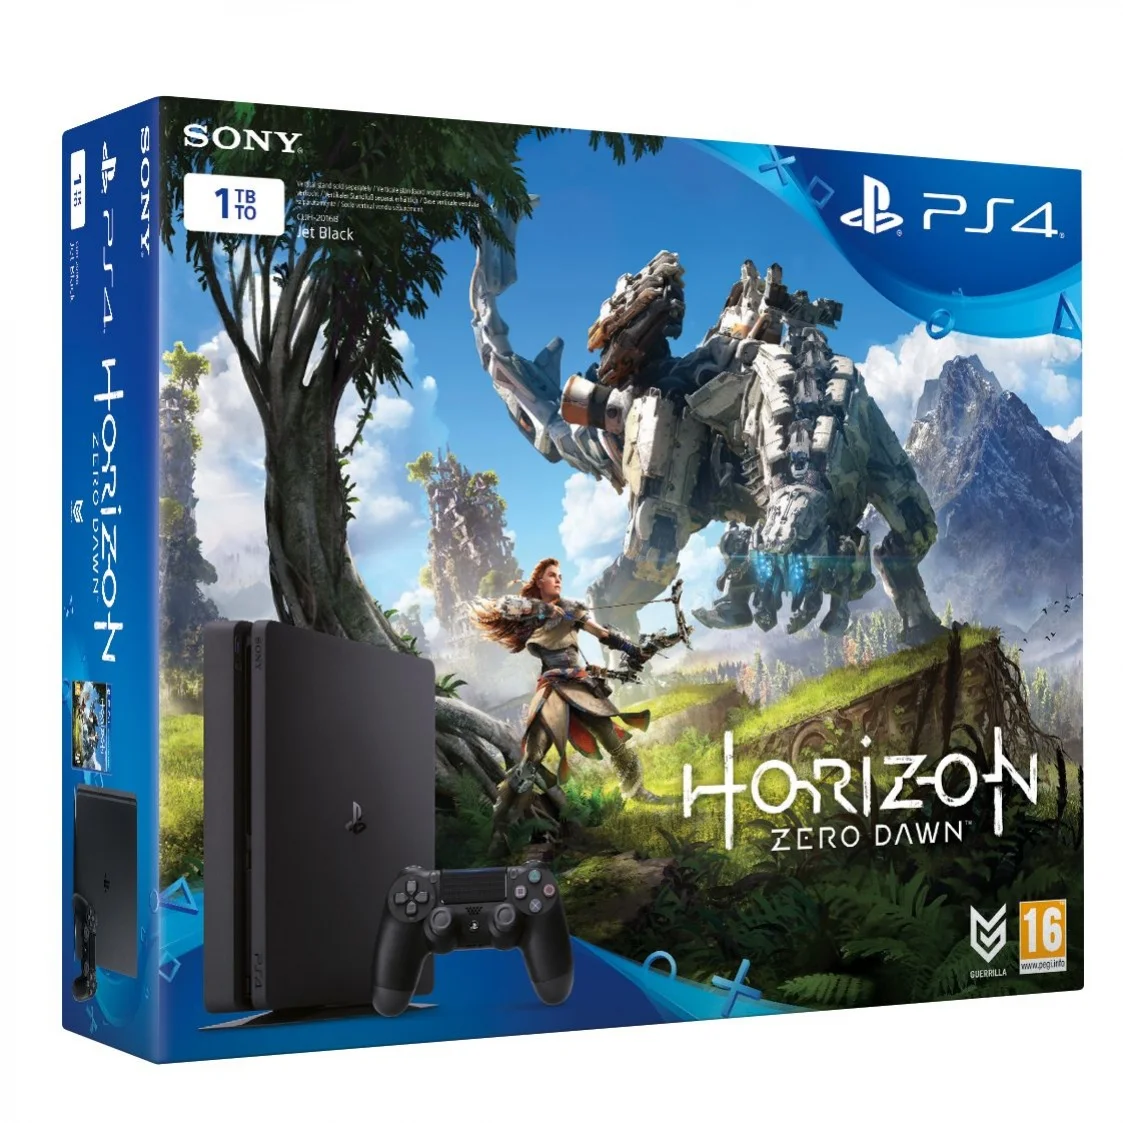 Sony выпустит бандл с PS4 и Horizon: Zero Dawn - фото 1